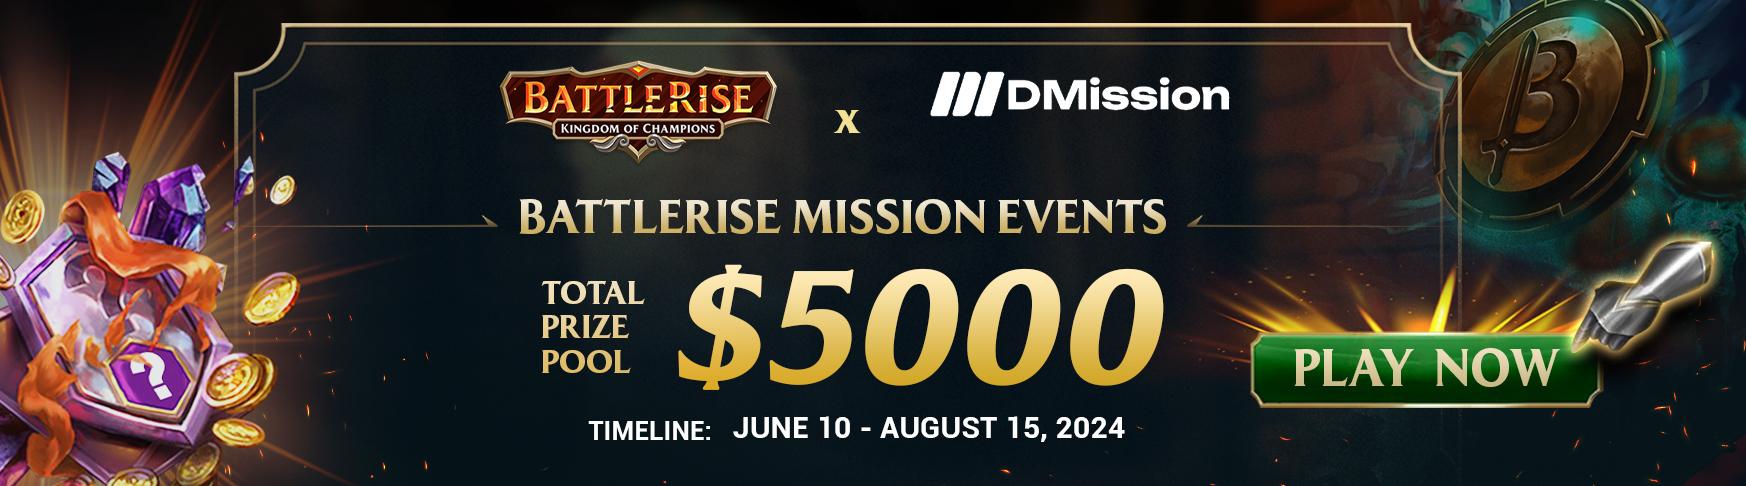 $5,000 BATTLERISE MISSION EVENTS